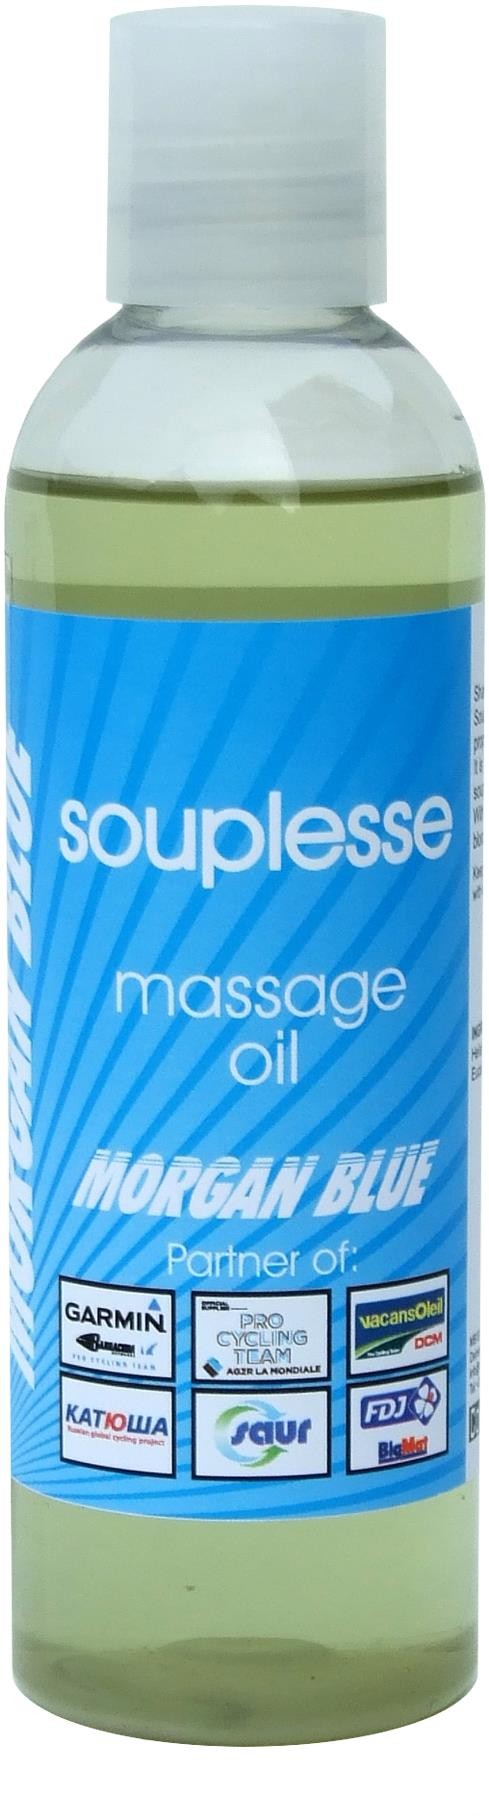 Souplesse Massage Oil image 0